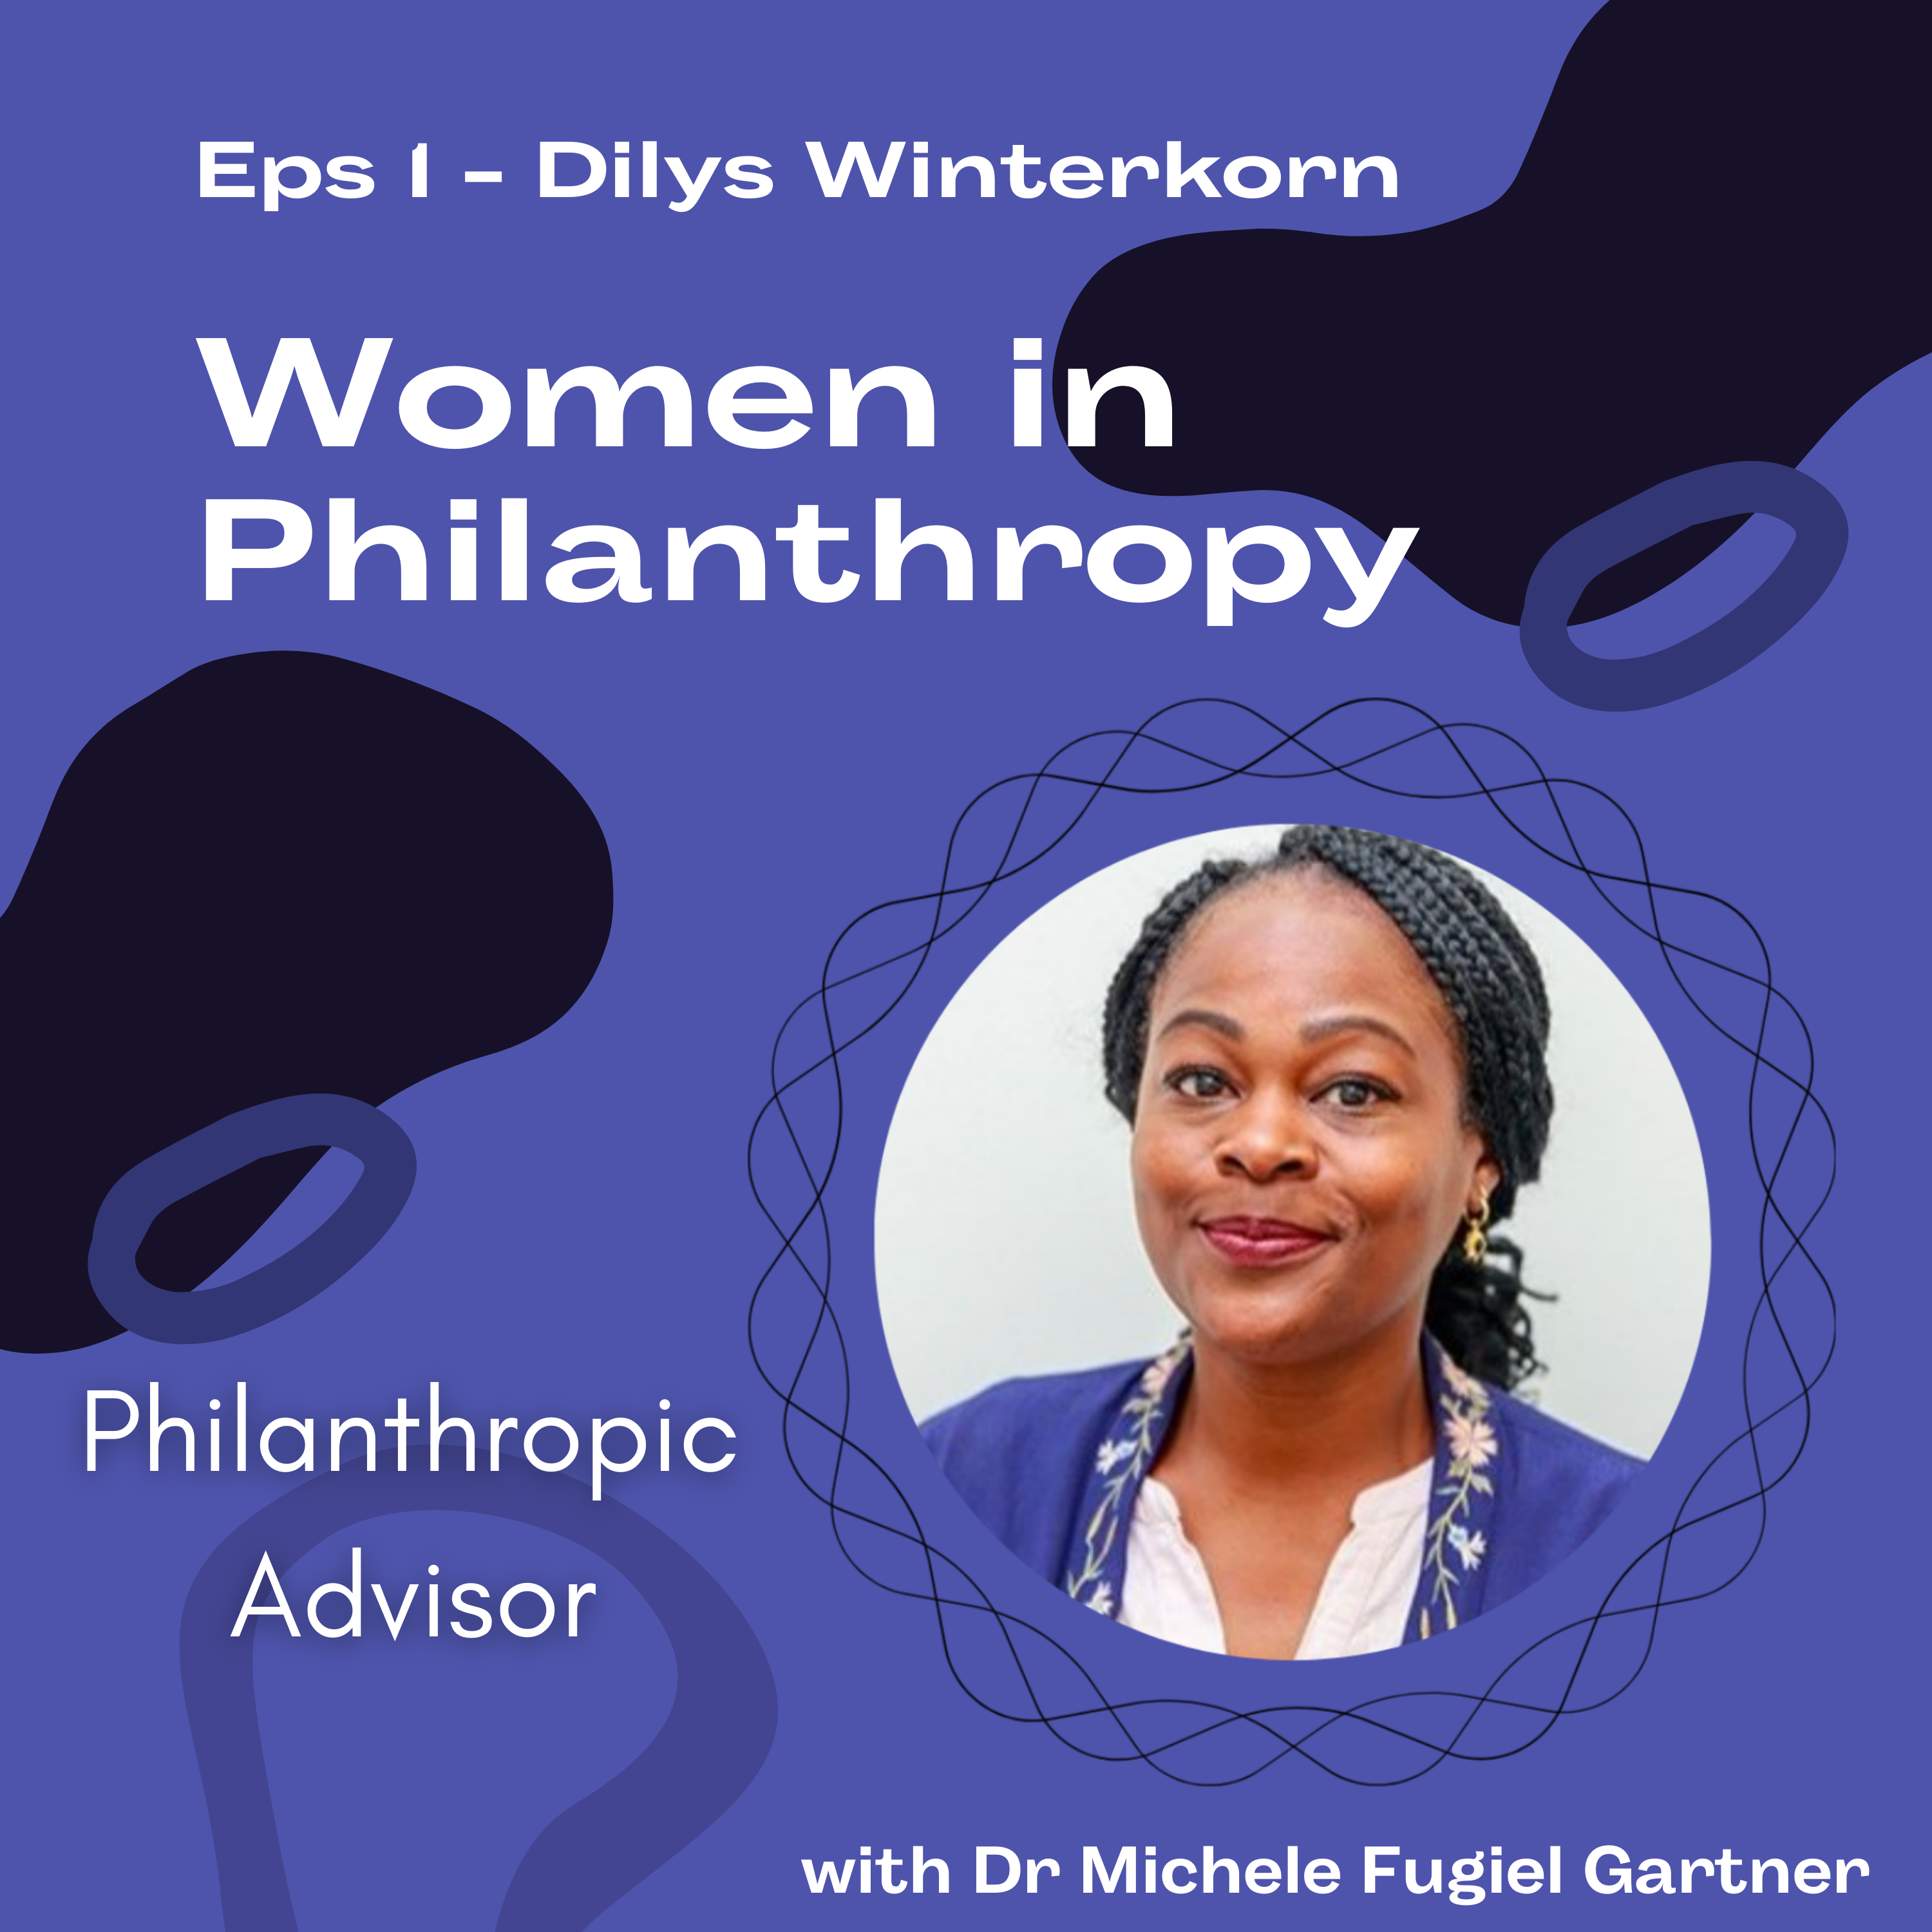 Dilys Winterkorn, Philanthropic Advisor